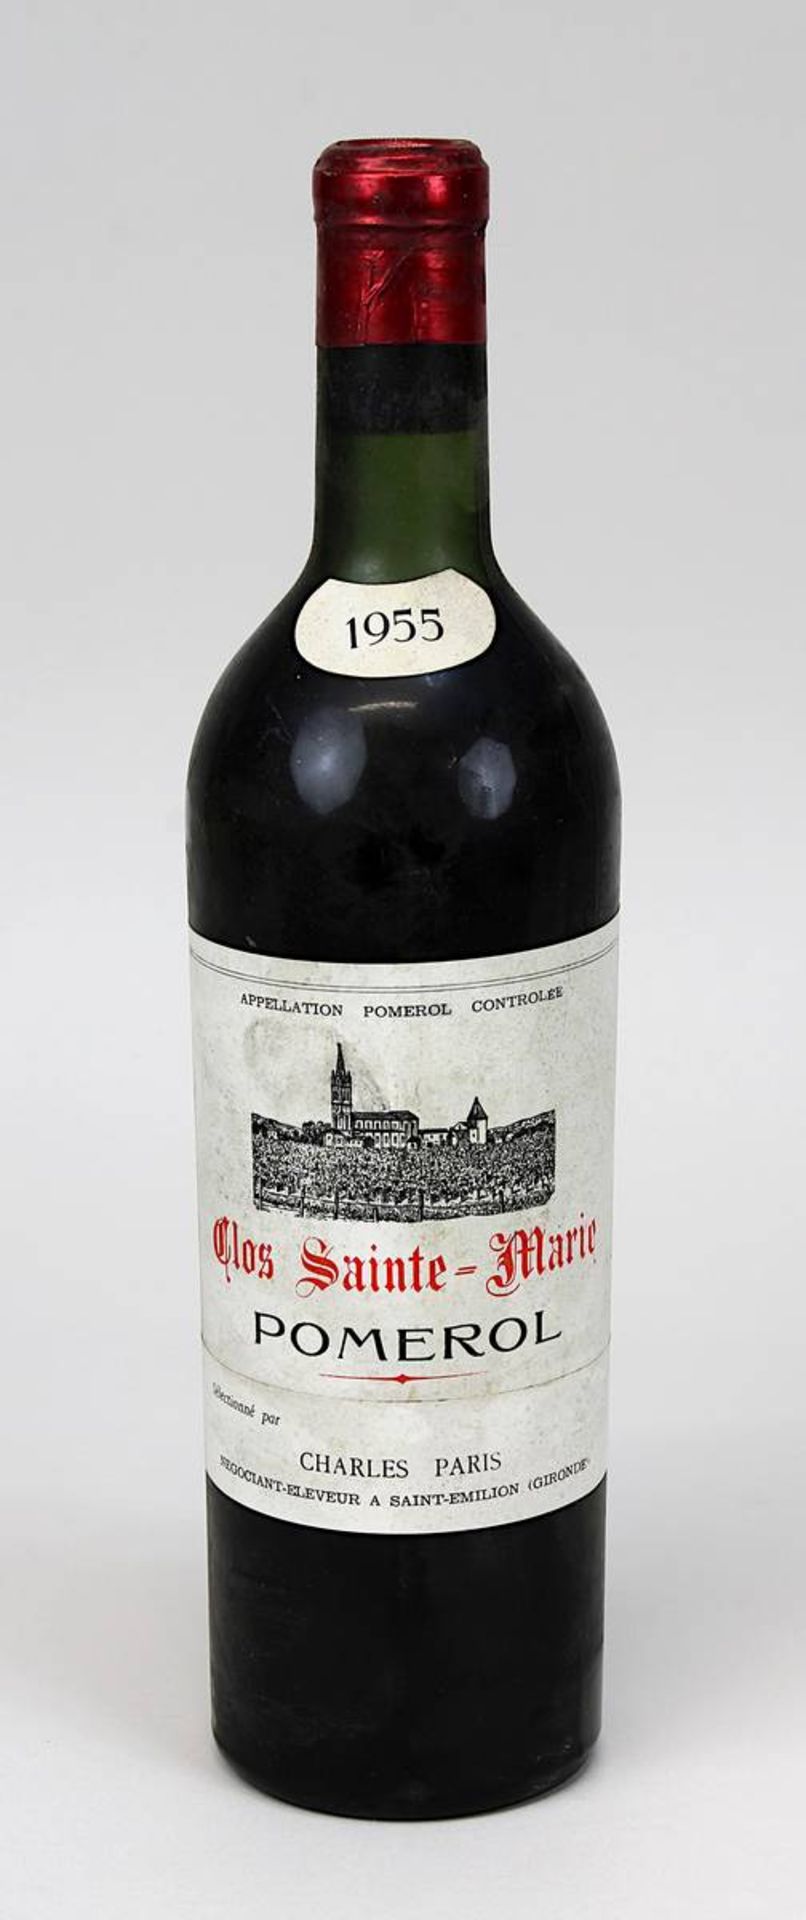 1 Flasche 1955er Clos Sainte - Marie Pomerol, Charles Paris, Saint-Emilion Gironde, Füllhöhe: